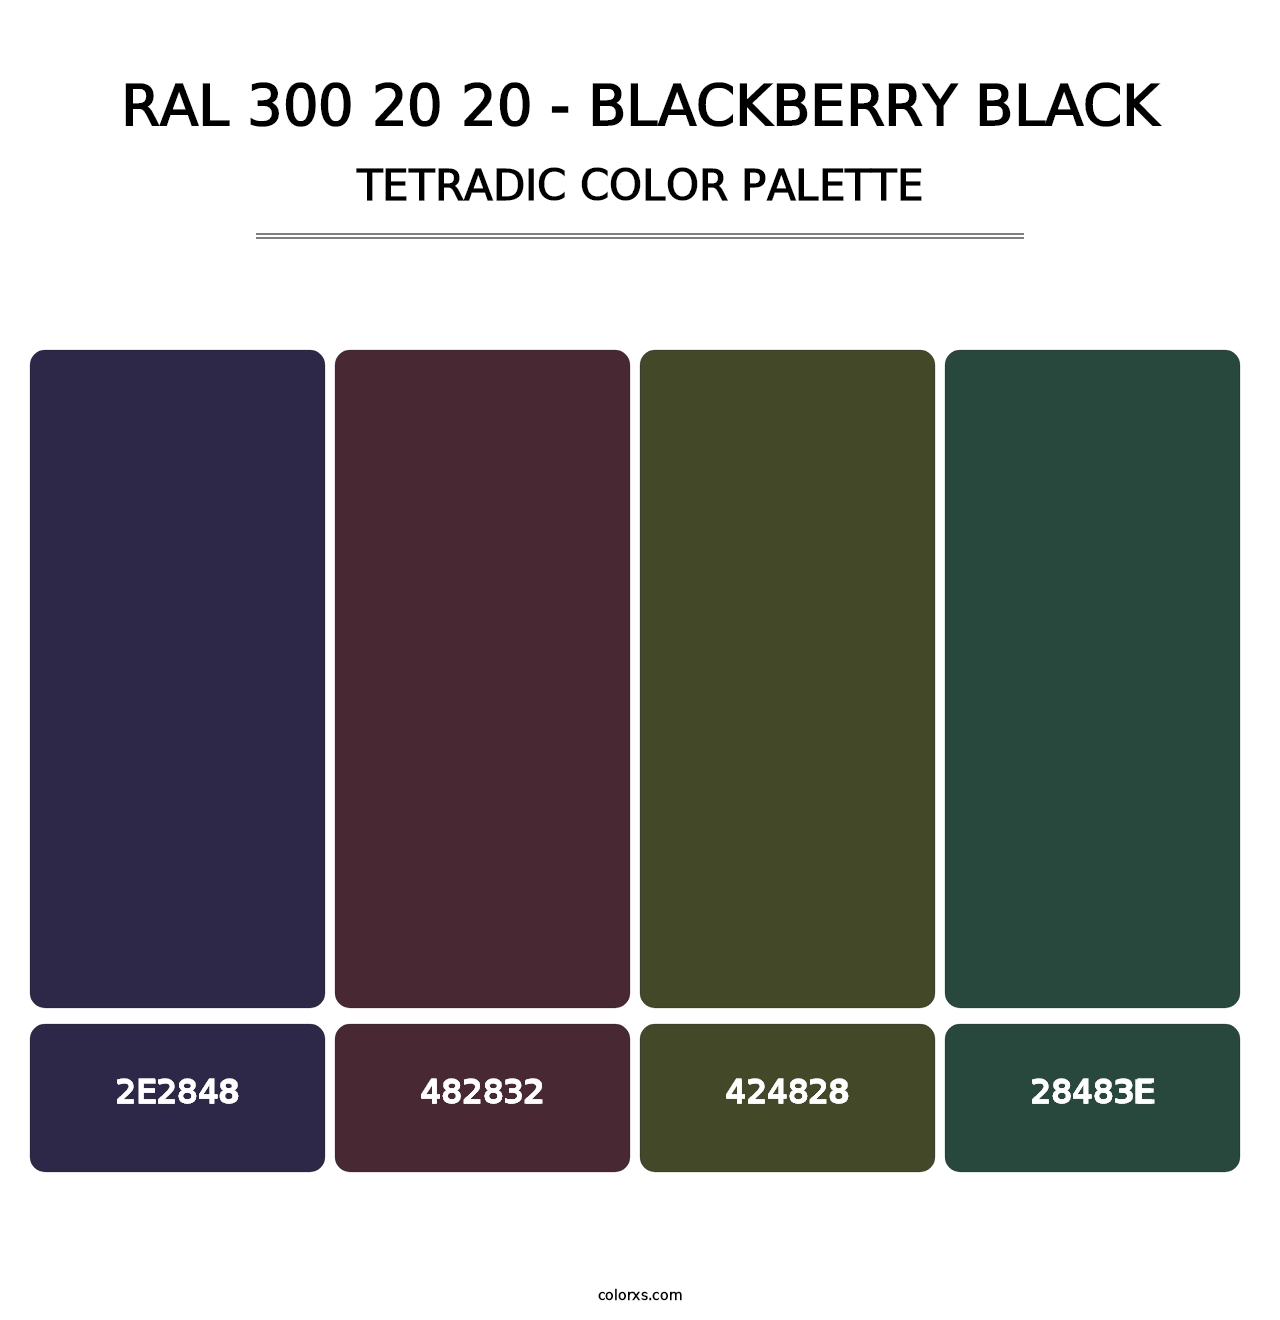 RAL 300 20 20 - Blackberry Black - Tetradic Color Palette